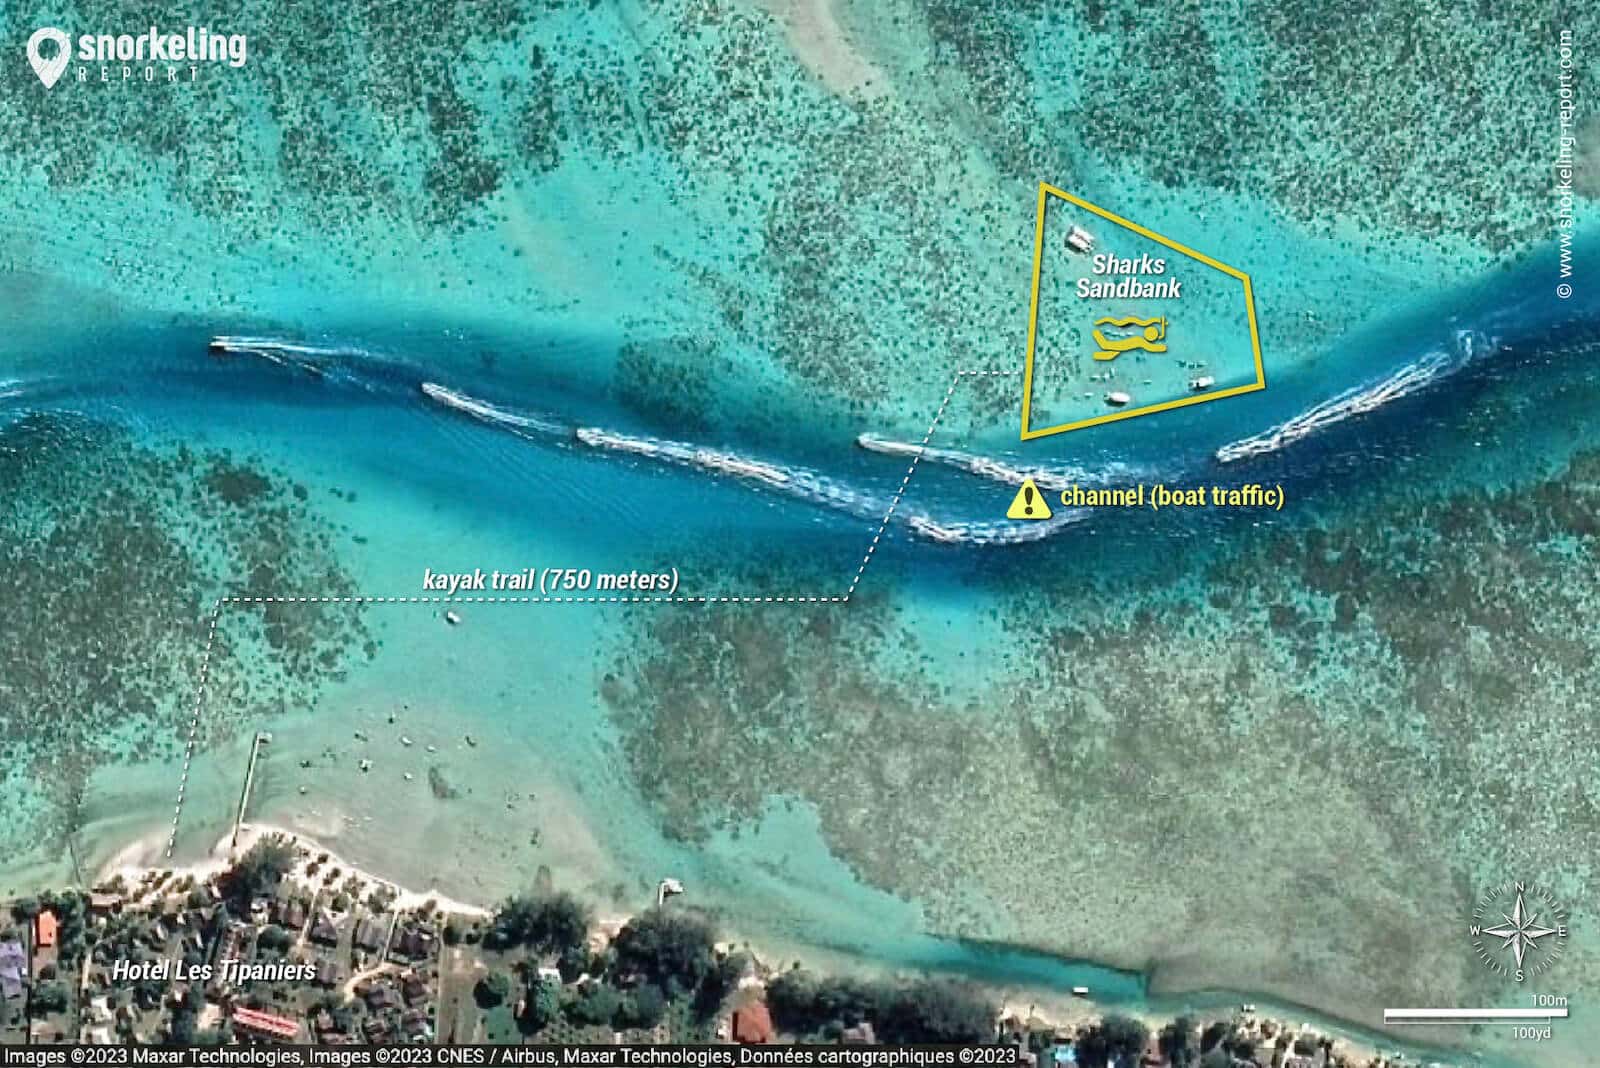 The Sharks Sandbank snorkeling map, Moorea.